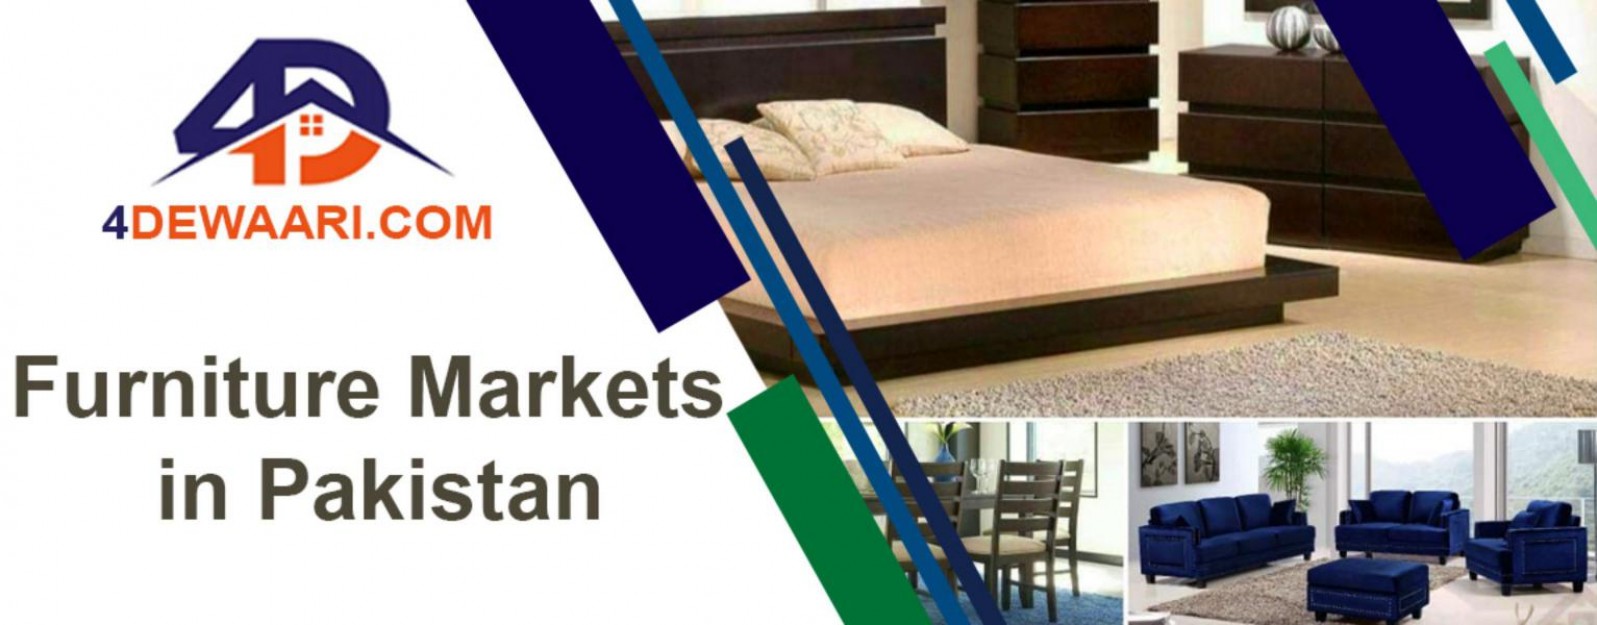 Best Home Furniture Market in Pakistan 2021